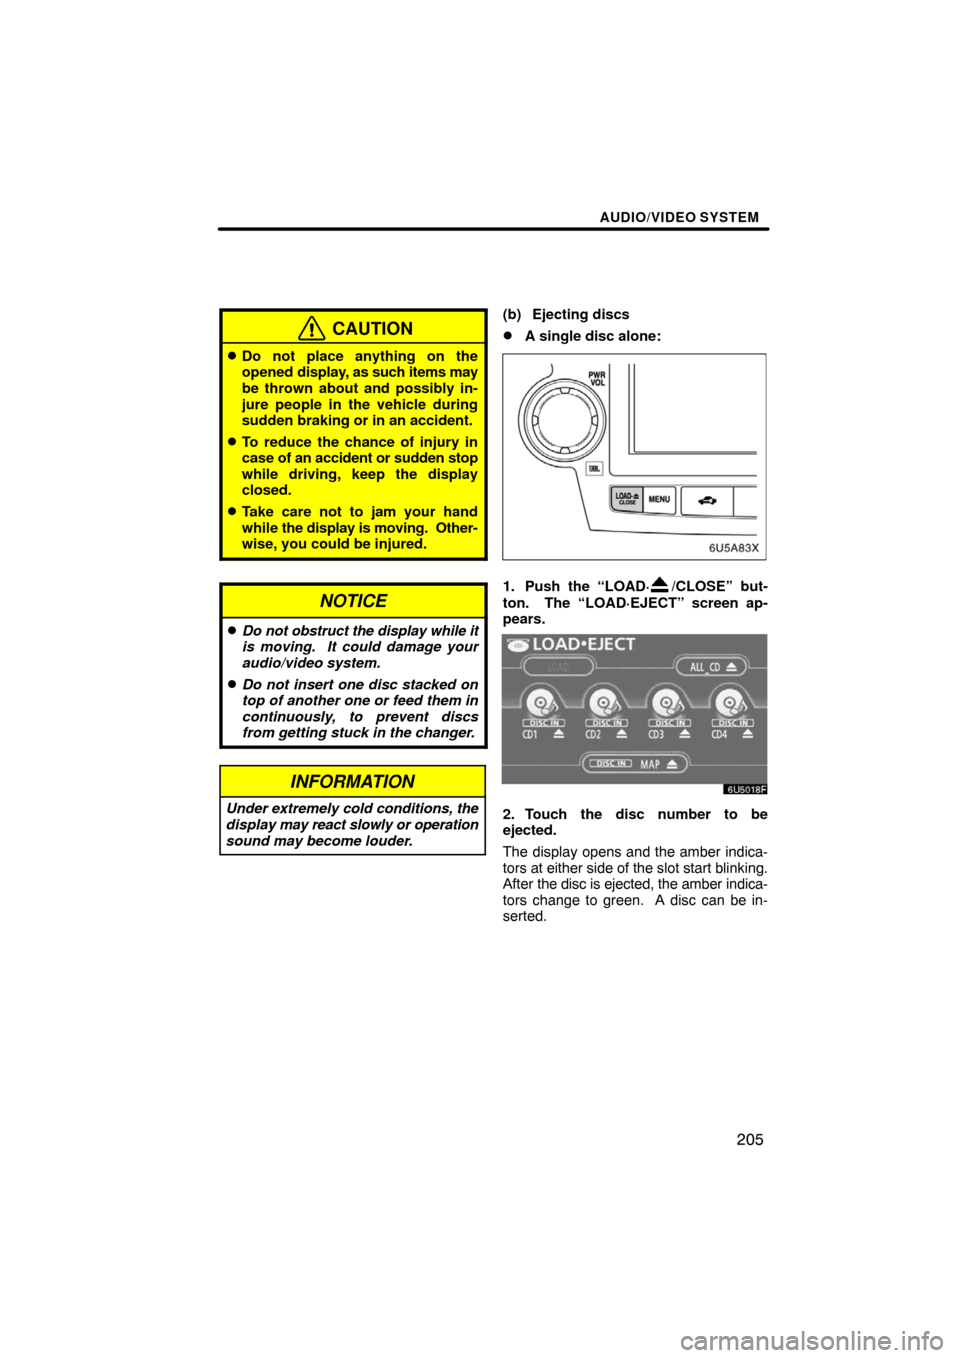 TOYOTA HIGHLANDER 2008 XU40 / 2.G Navigation Manual AUDIO/VIDEO SYSTEM
205
CAUTION
Do not place anything on the
opened display, as such items may
be thrown about and possibly in-
jure people in the vehicle during
sudden braking or in an accident.
To 